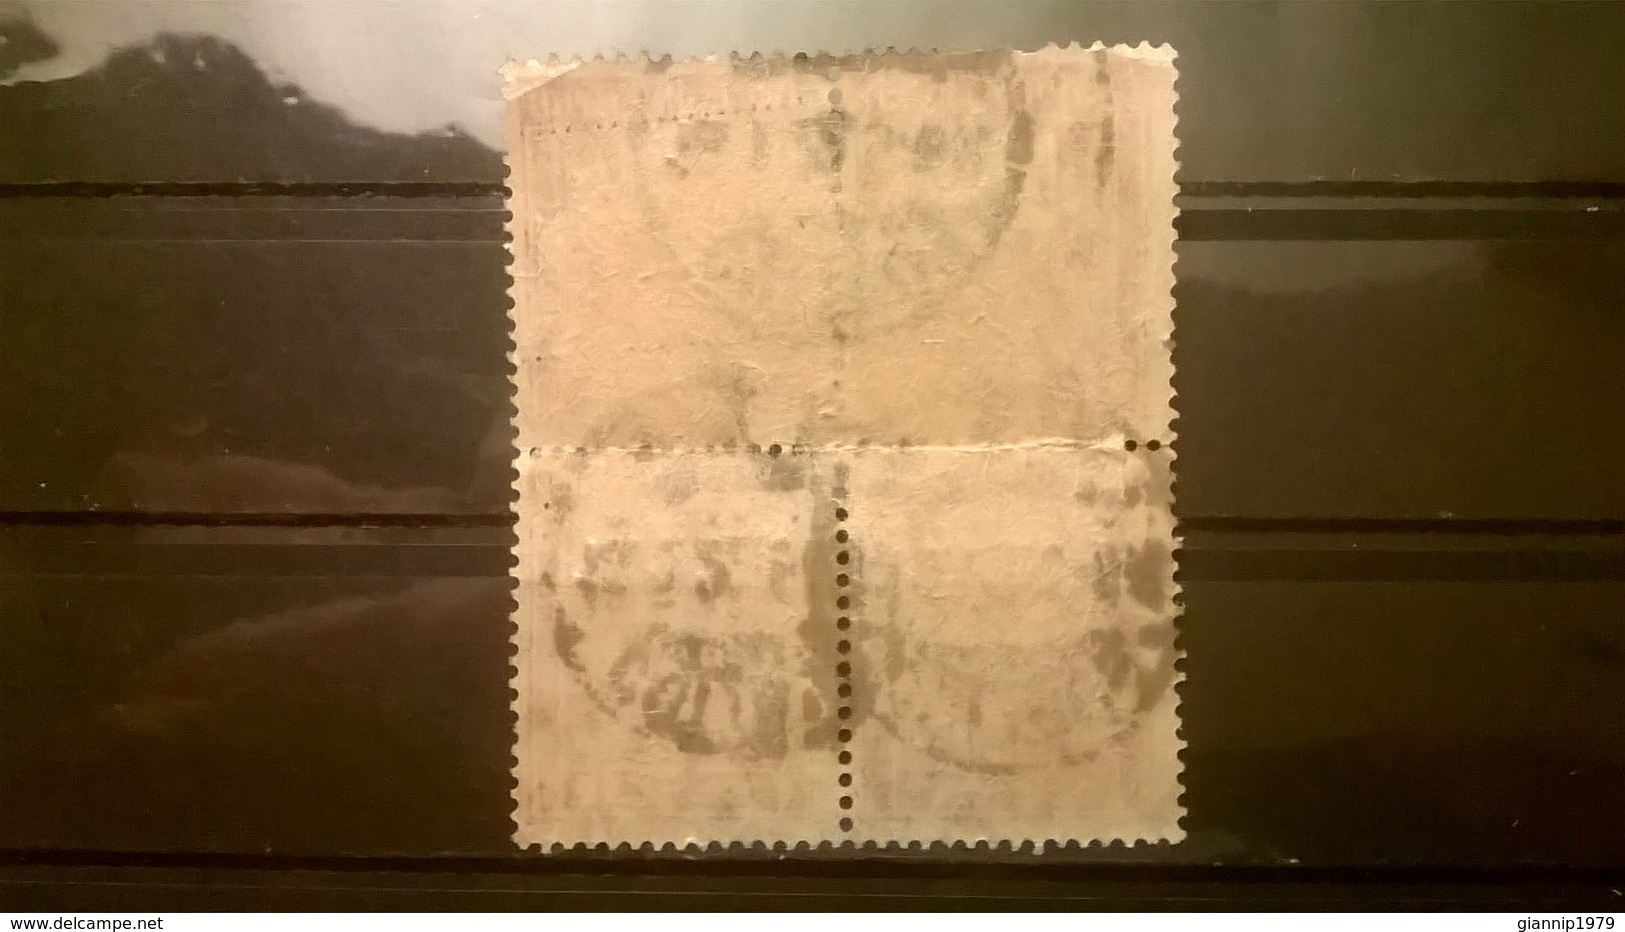 FRANCOBOLLI STAMPS GERMANIA DEUTSCHE 1921 USED SU FRAMMENTO QUARTINA NUMERALS ANNLLO COTTBUS GERMANY - Used Stamps